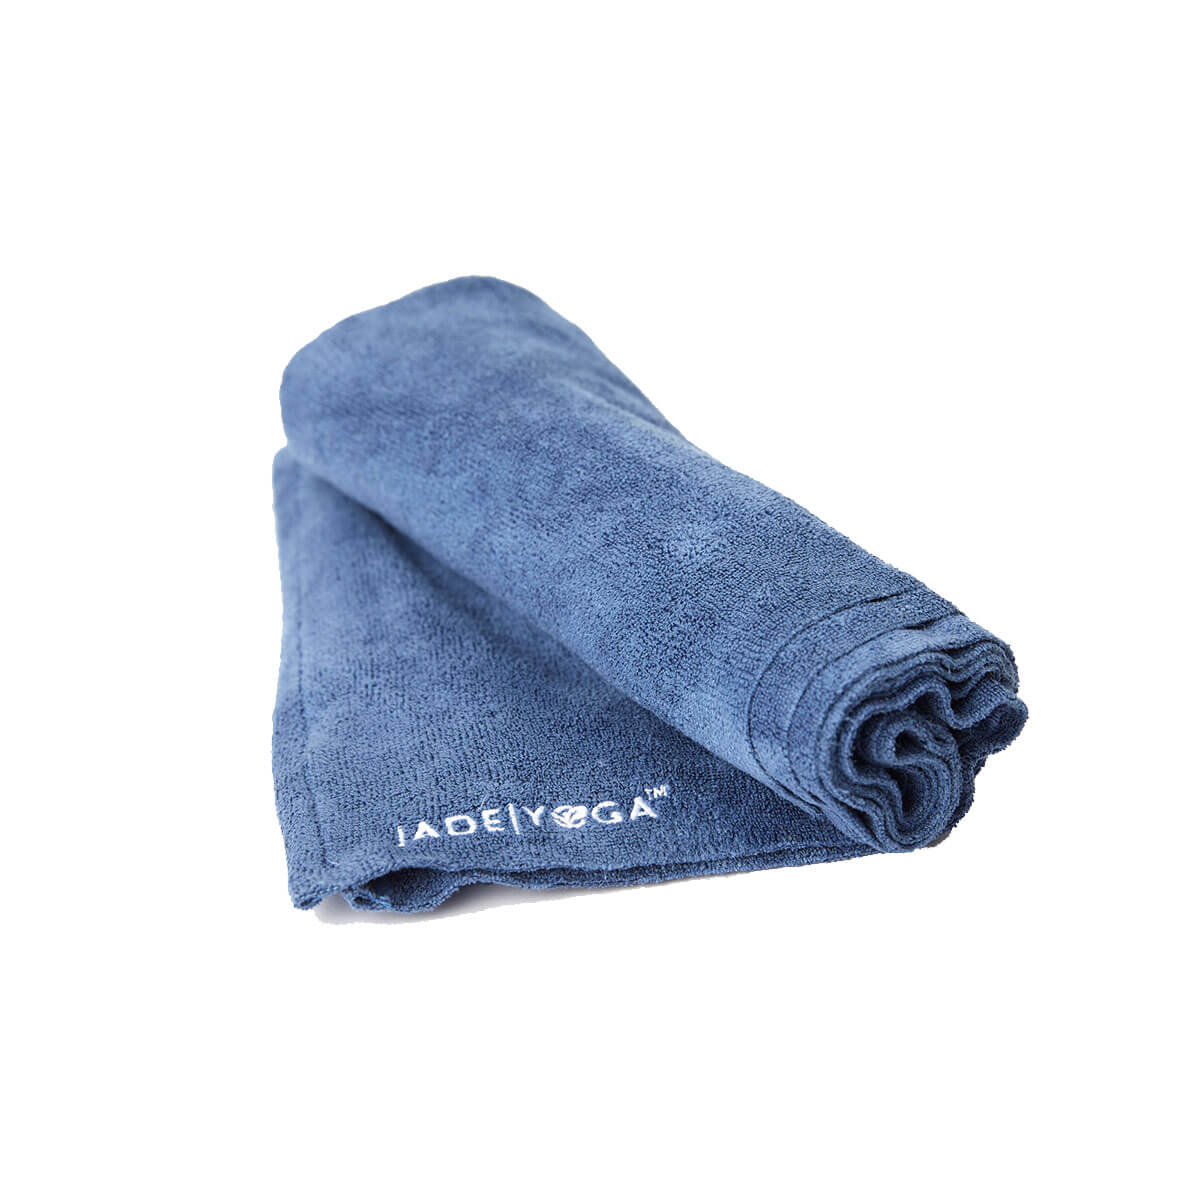 HemingWeigh Microfiber Highly Absorbent Yoga Mat Towel